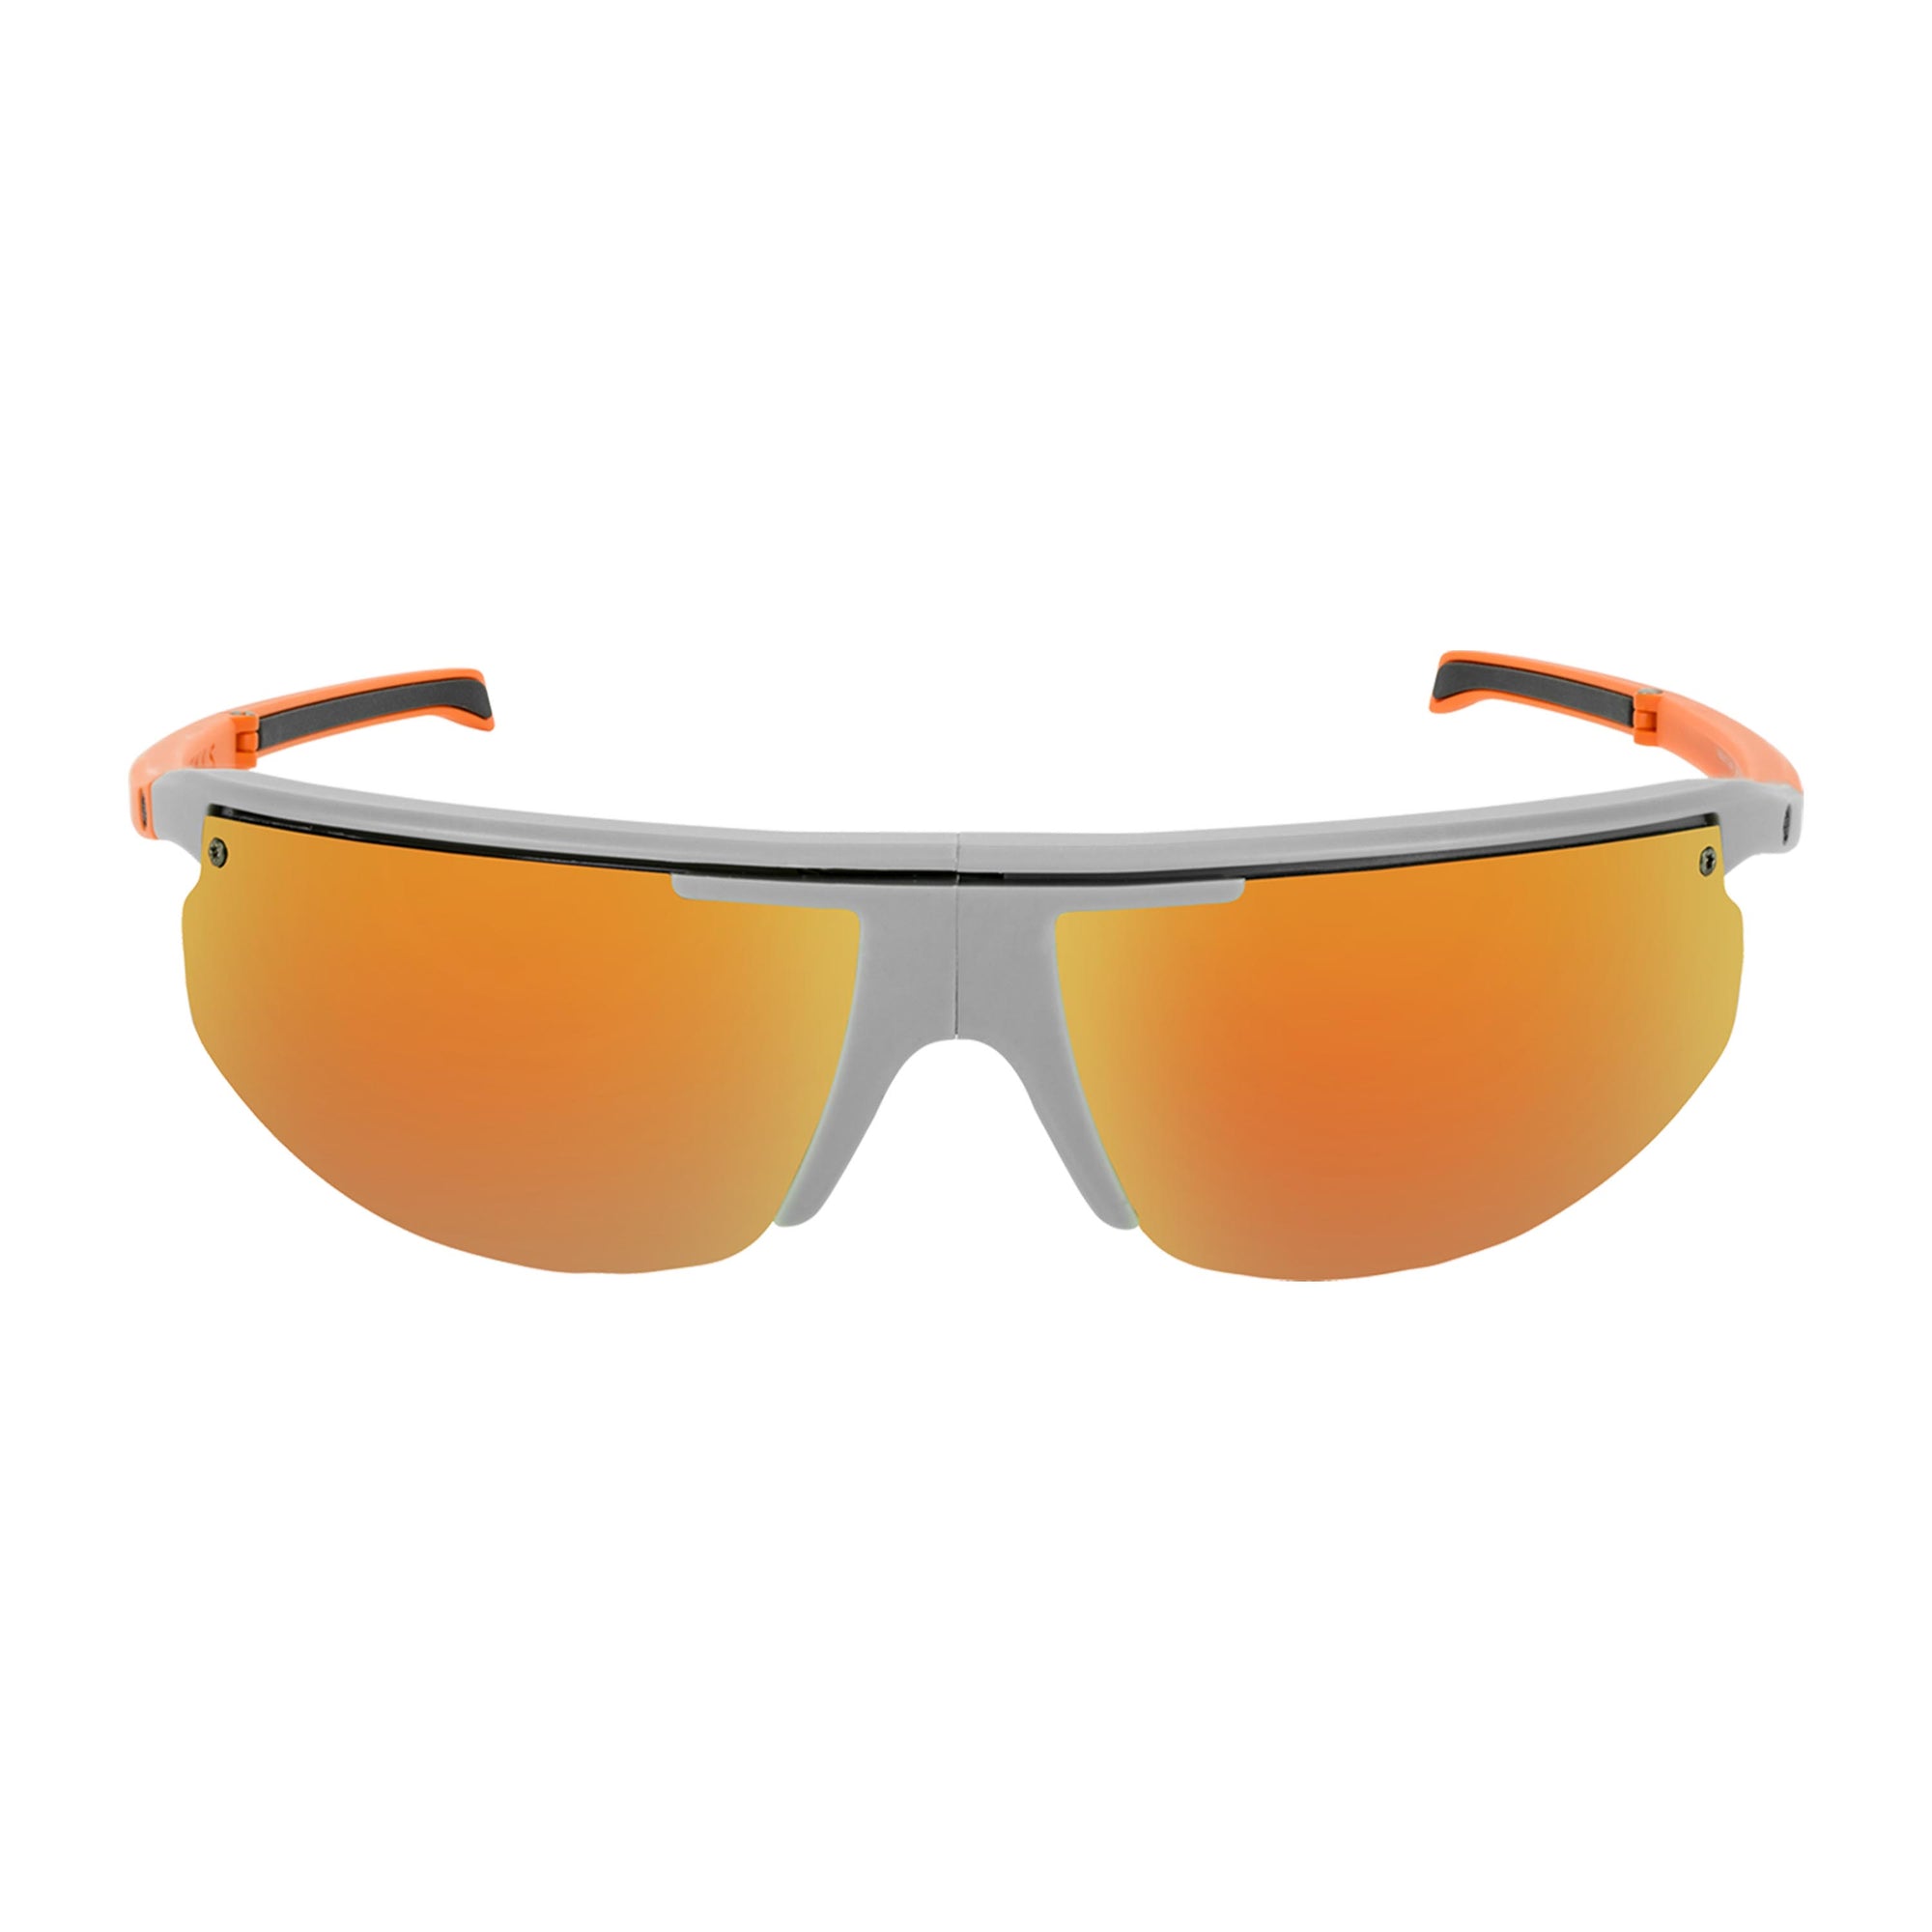 Popticals, Premium Compact Sunglasses, PopStar, 010040-OMGP, Polarized Sunglasses, Matte Gray/Orange Frame, Gray Lenses w/Orange Mirror Finish, Glam View